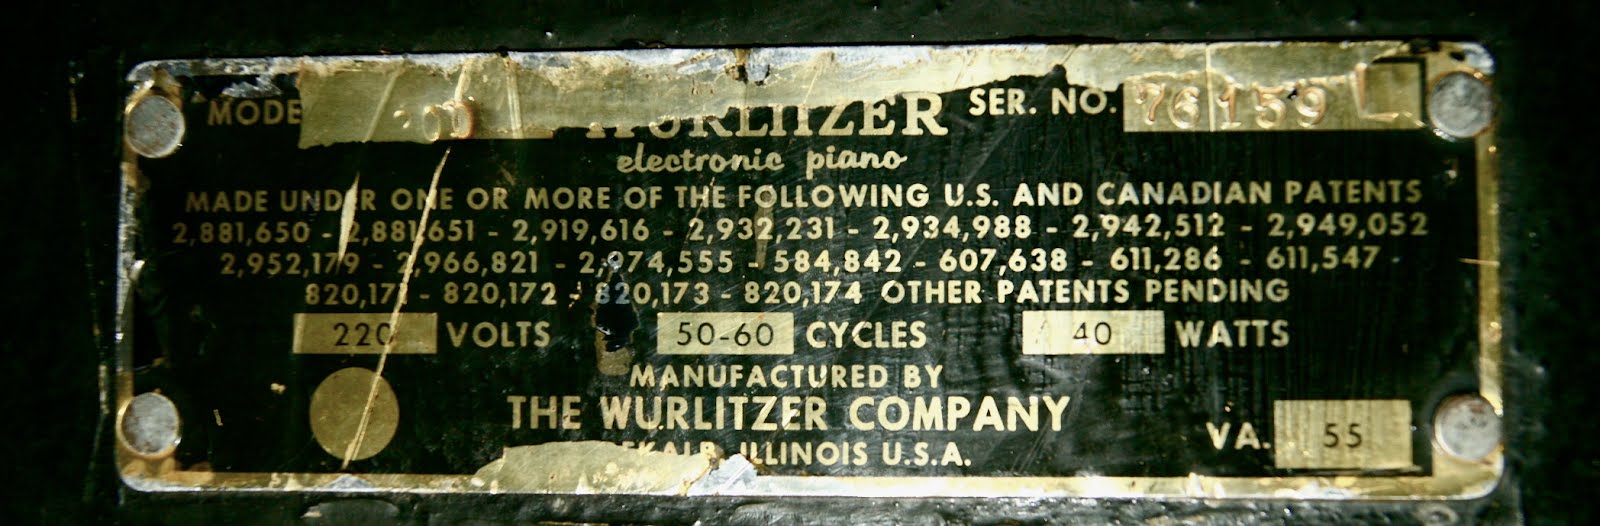 Wurlitzer Serial Number Lookup 48